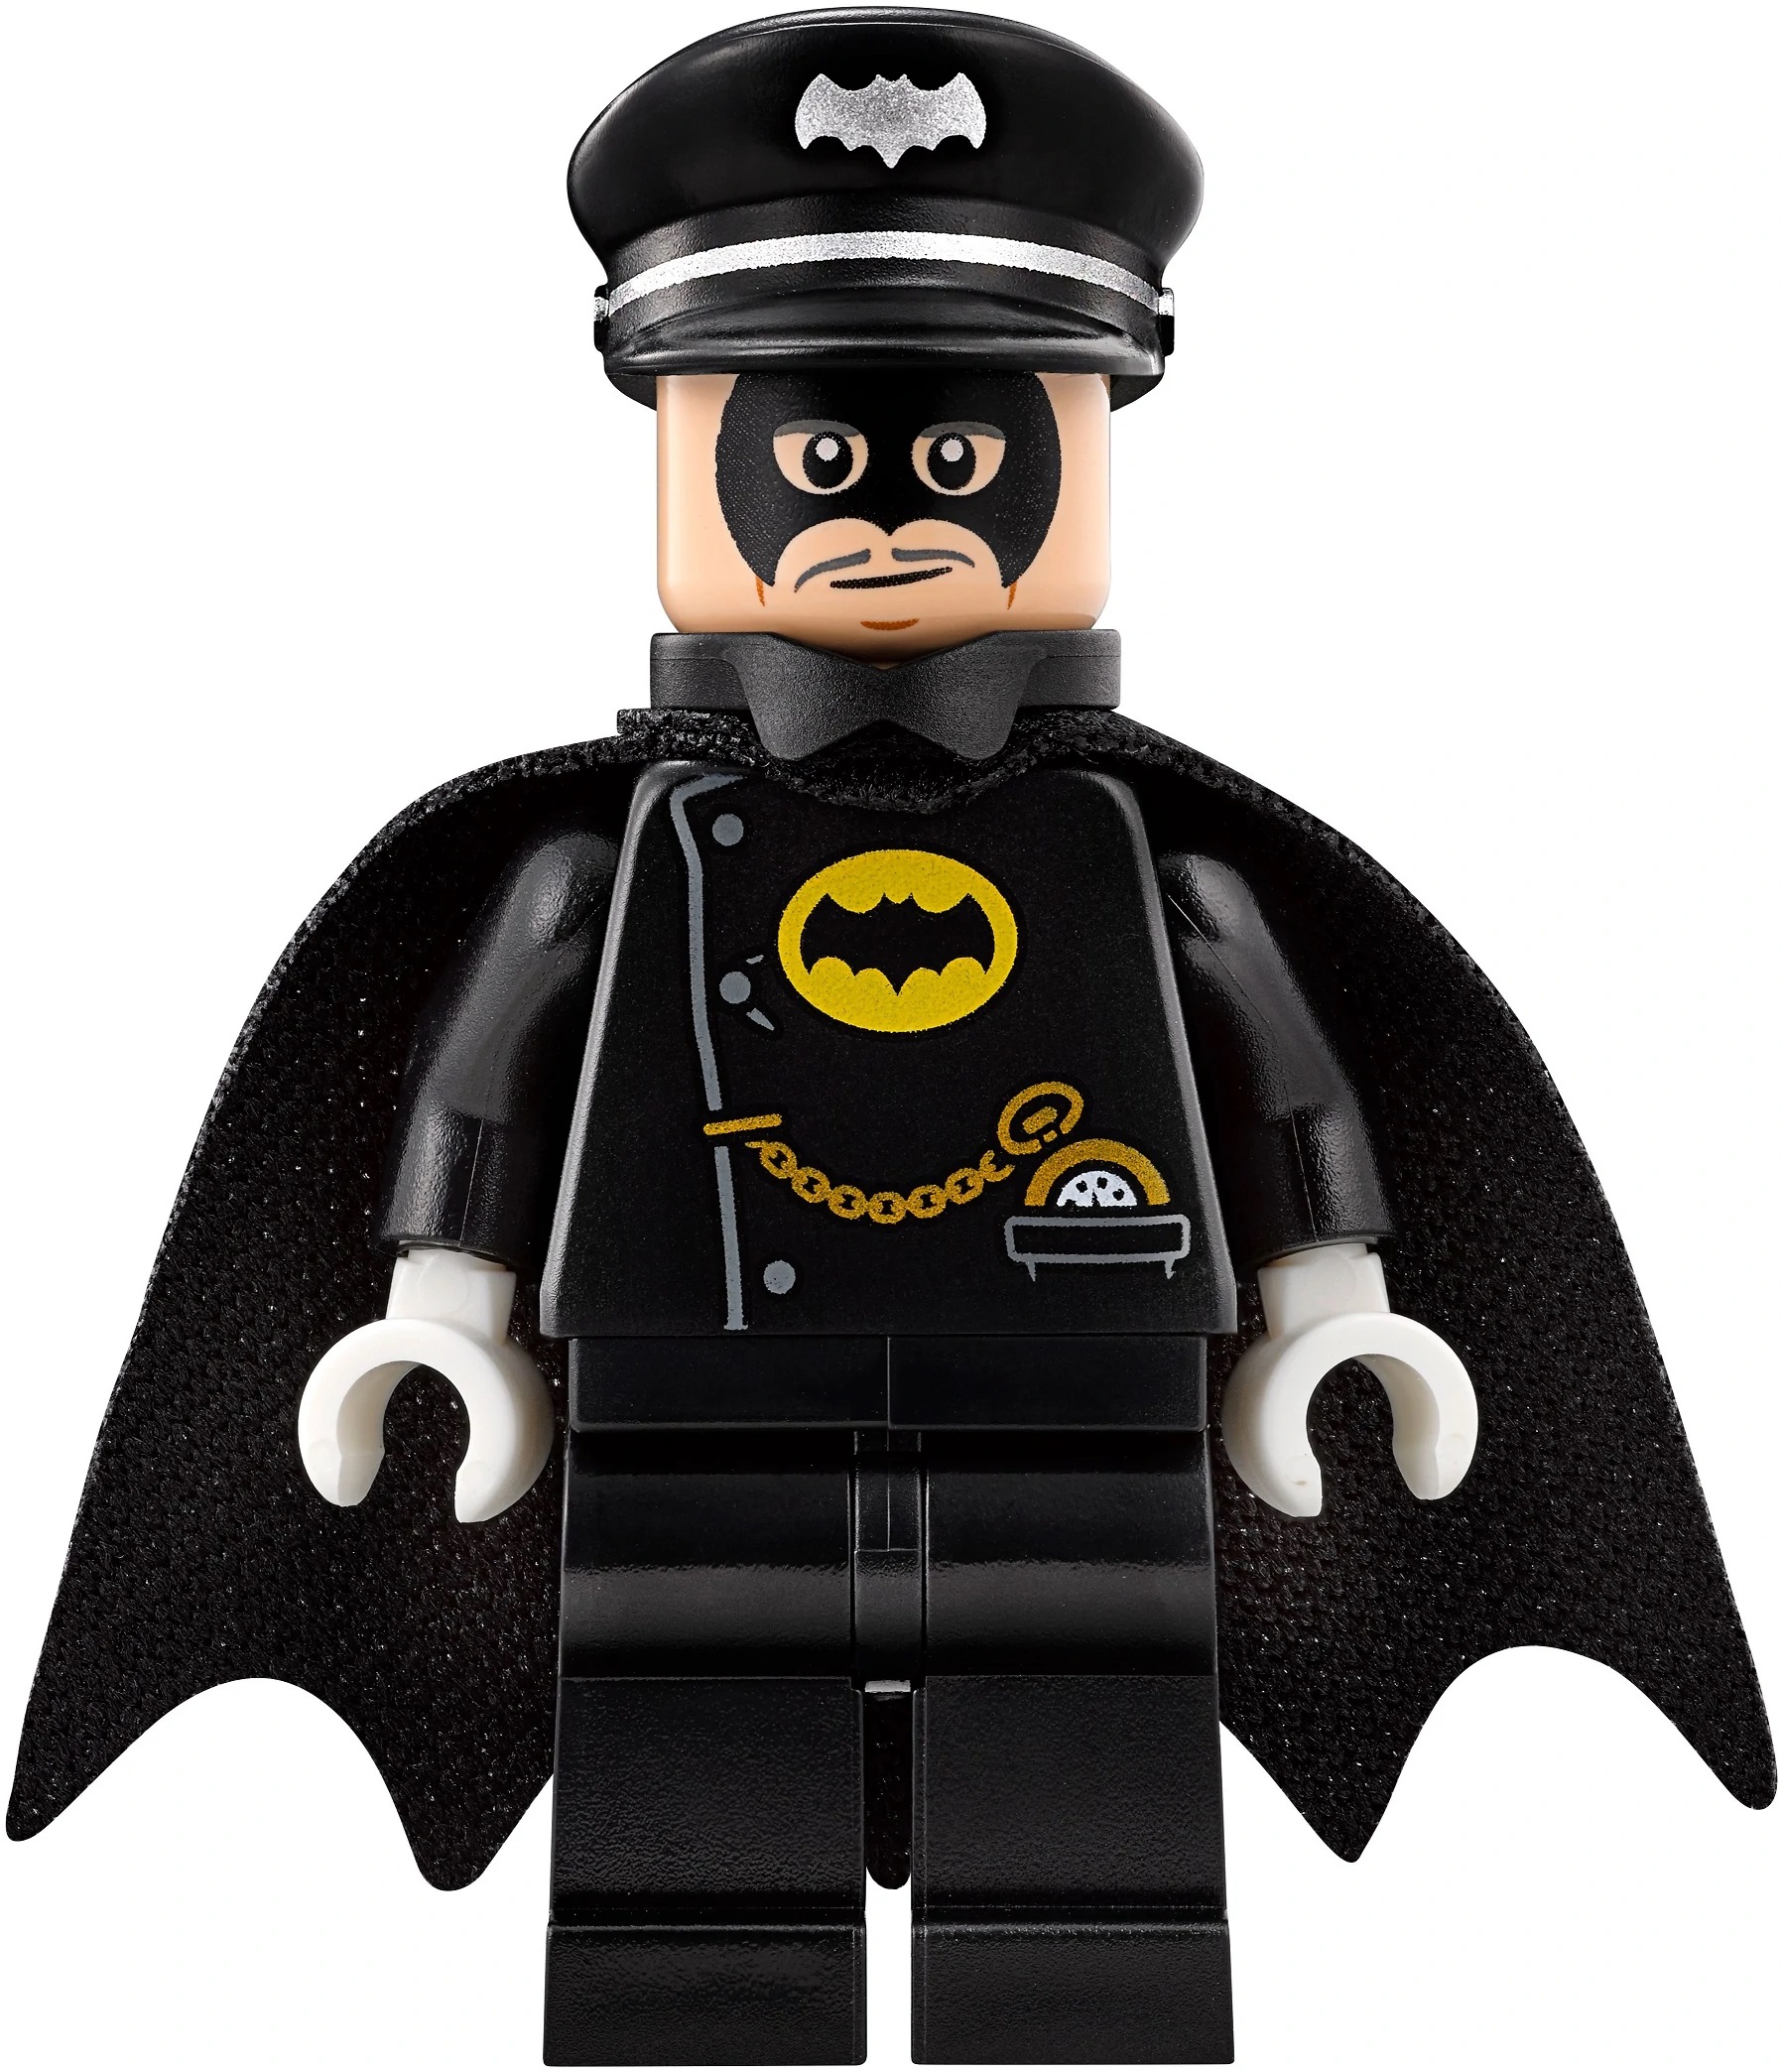 Bruce Wayne & Alfred Butler Printed on LEGO Parts Custom Designed Minifigures 